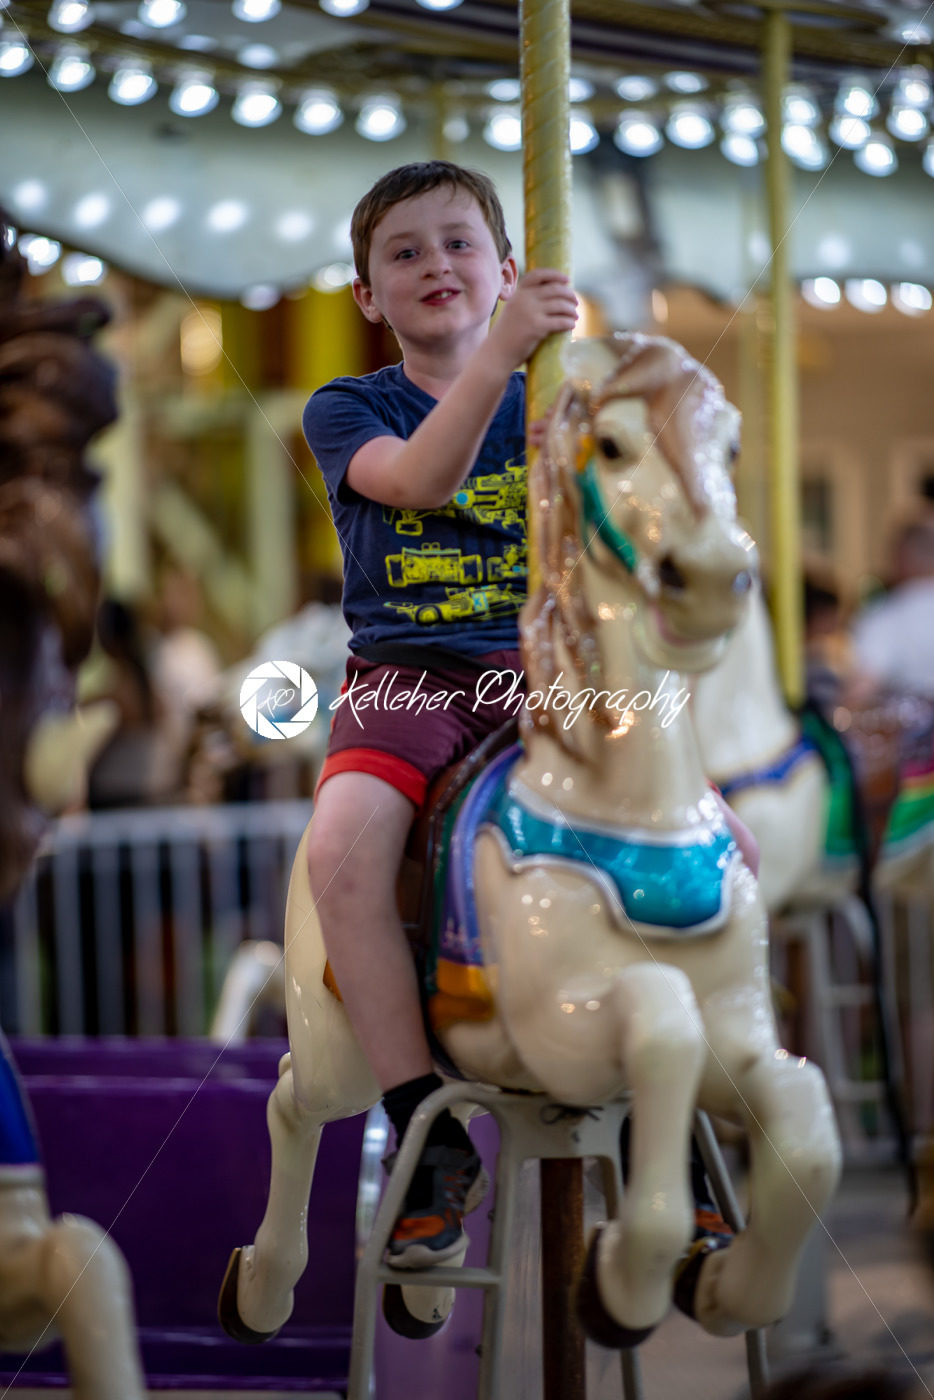 Happy young boy having fun on boardwalk amusement ride - Kelleher Photography Store